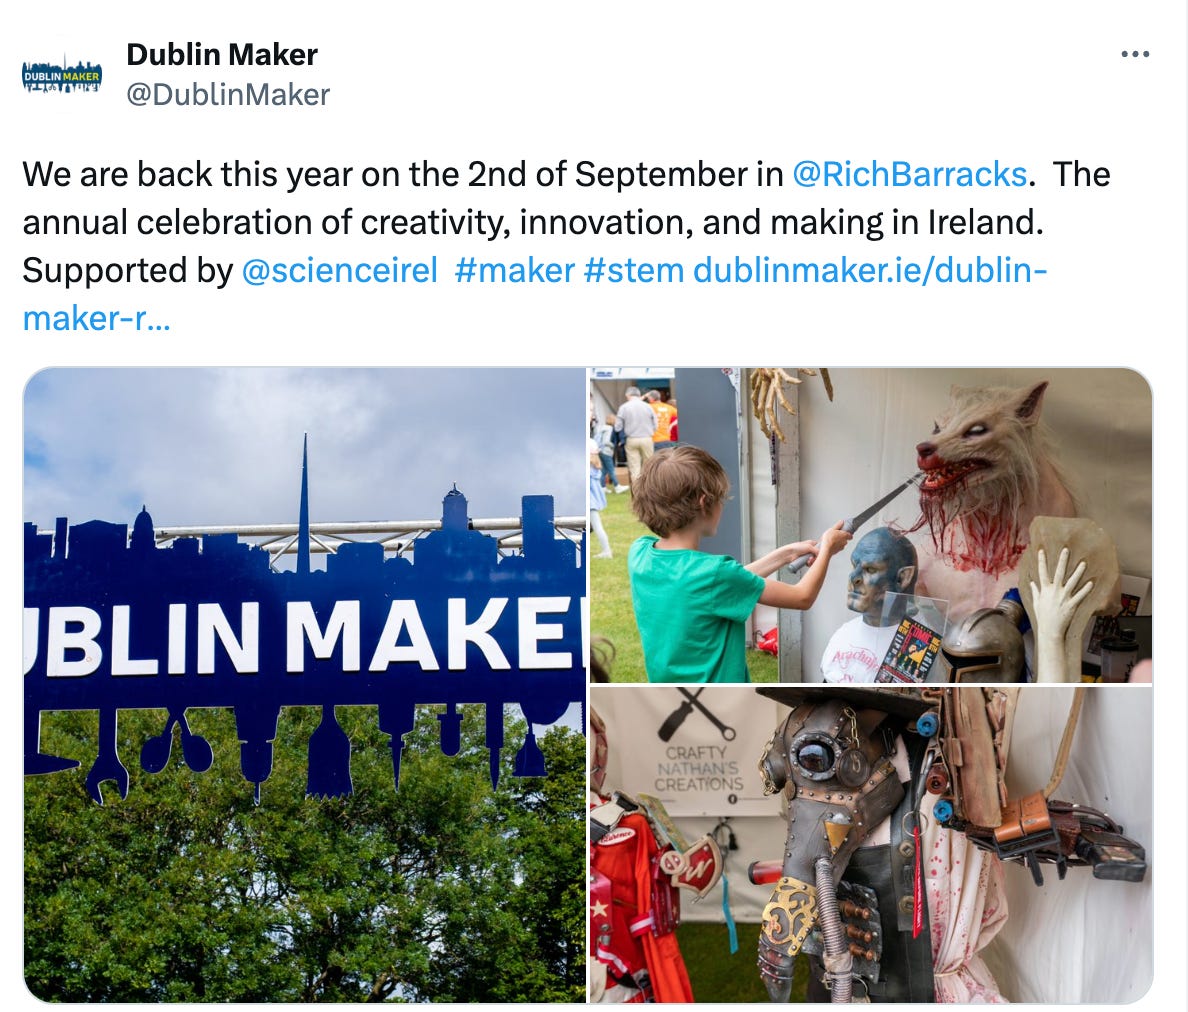 Dublin Maker Tweet about being back on Sep 2 at Richmond Barracks